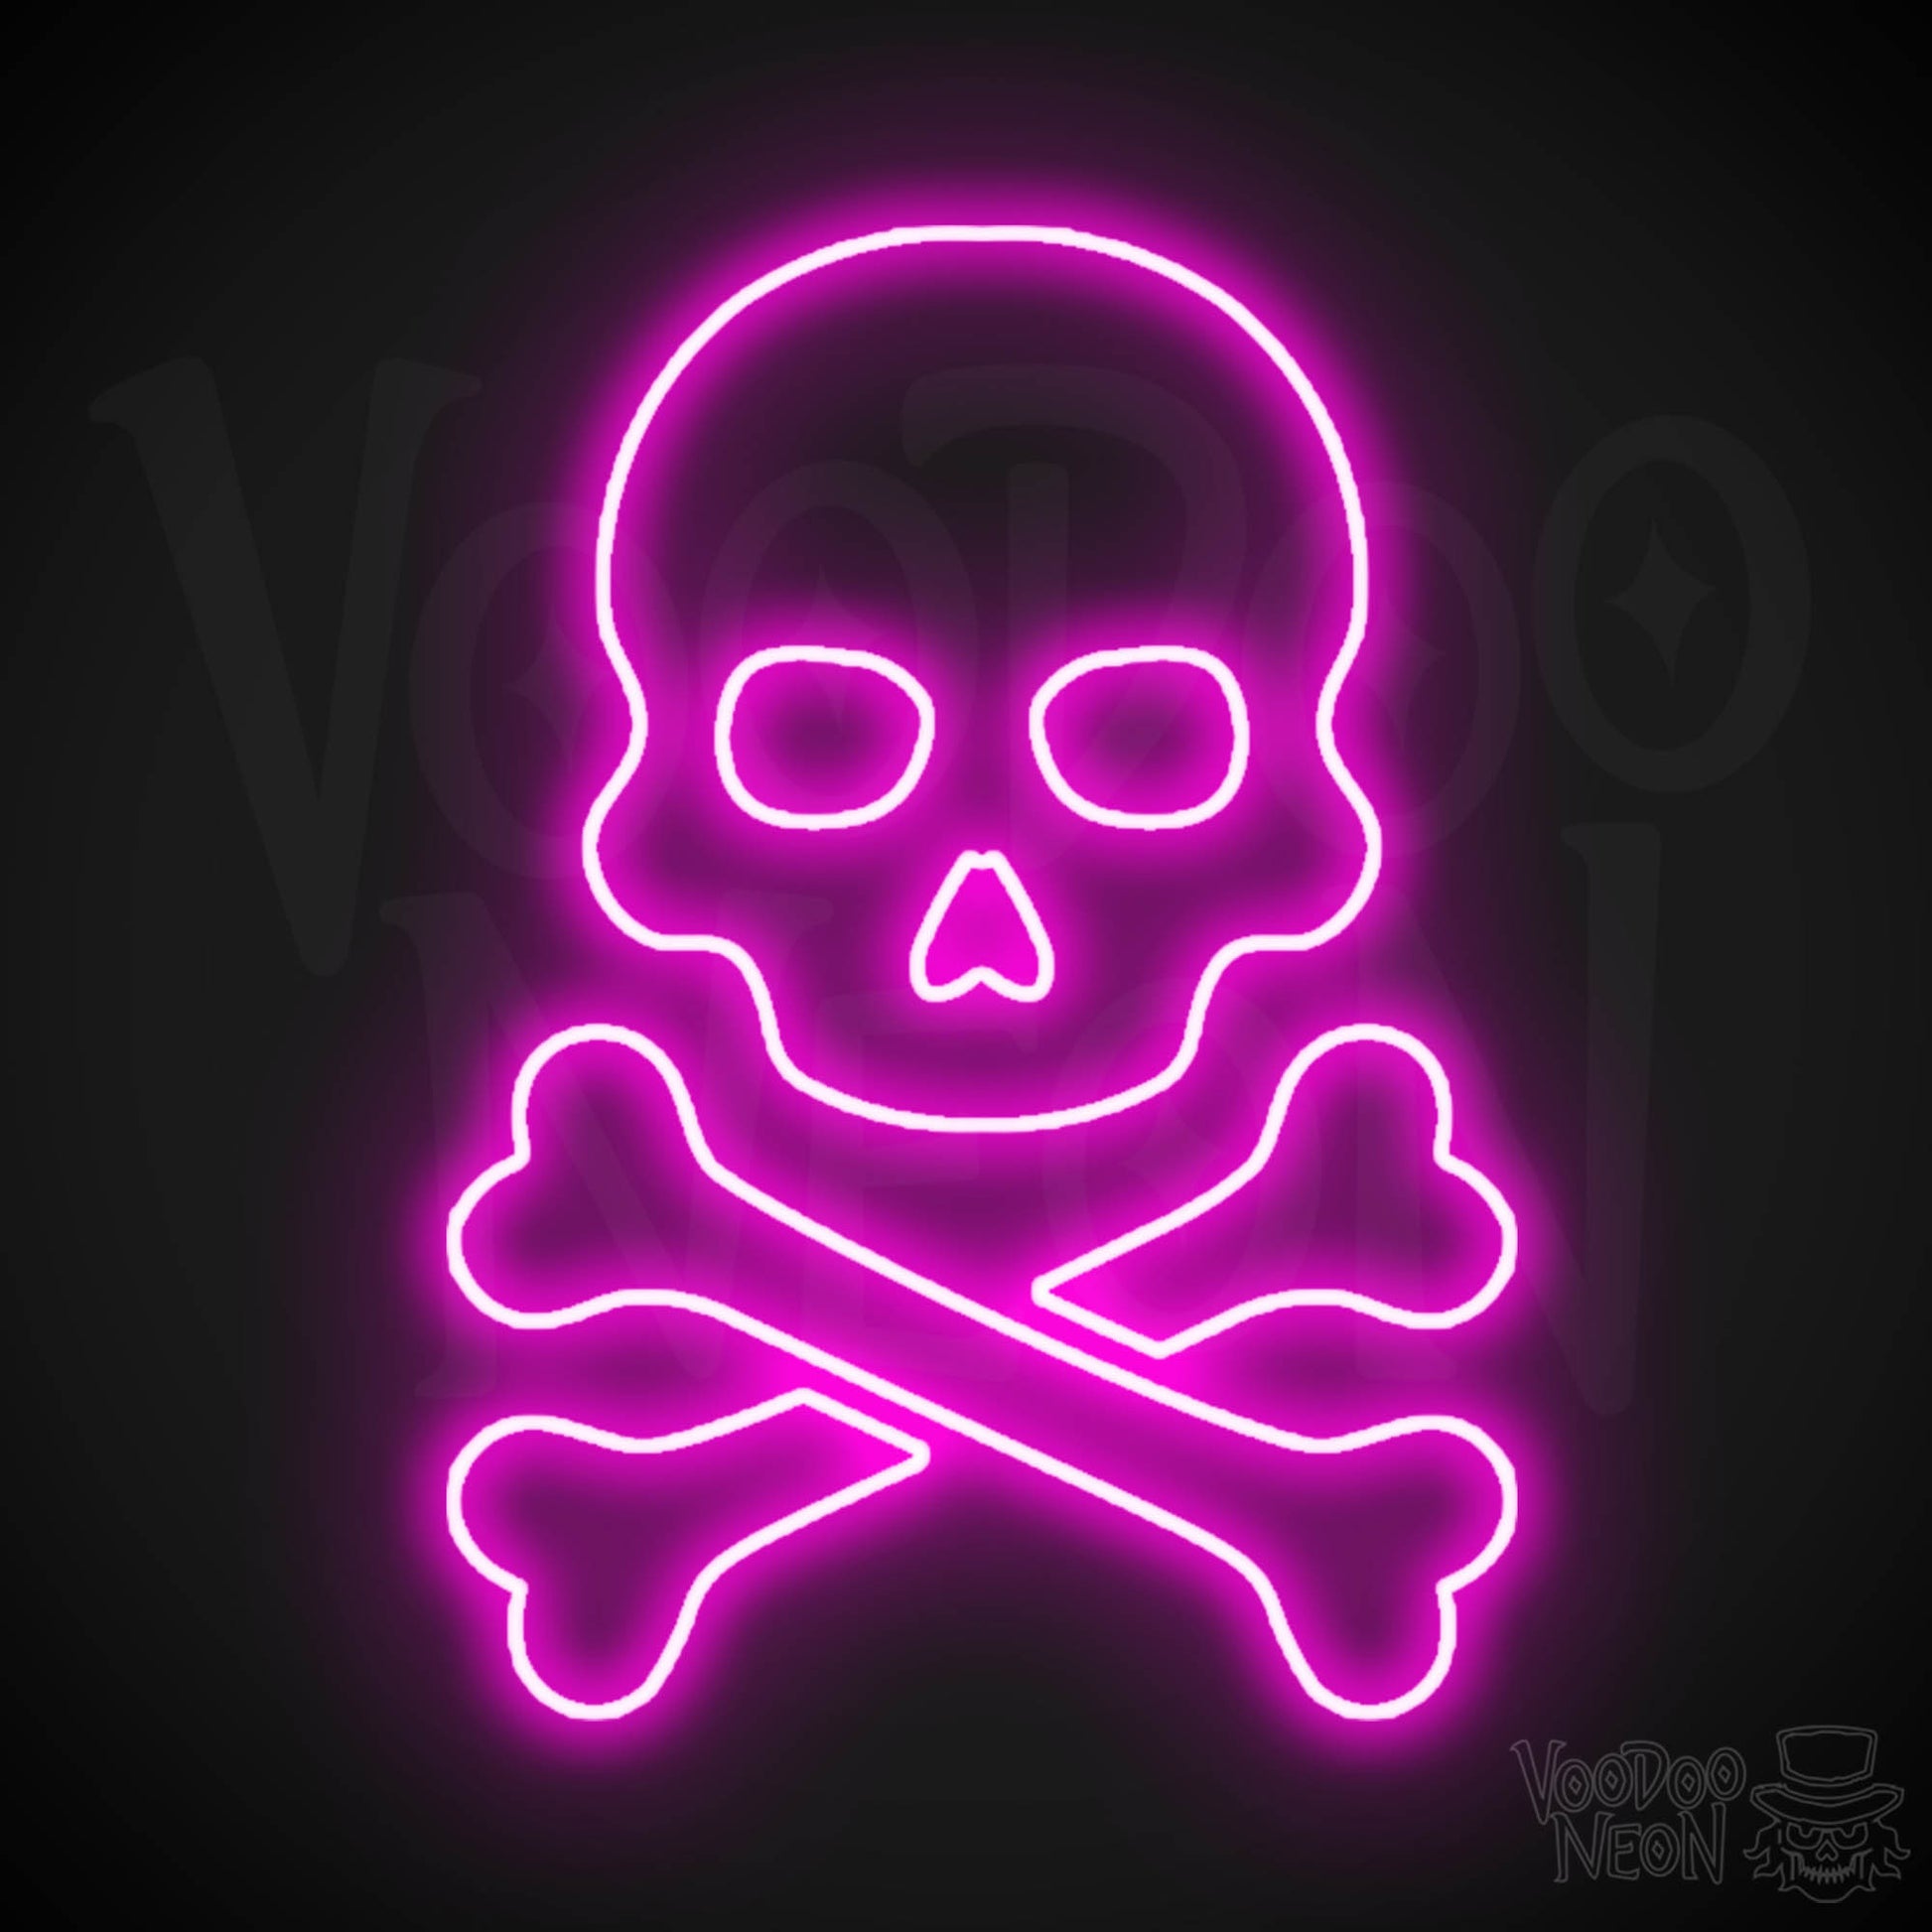 Pirate Skull & Crossbones Neon Sign - Neon Pirate Skull & Crossbones Sign - LED Lights - Color Pink